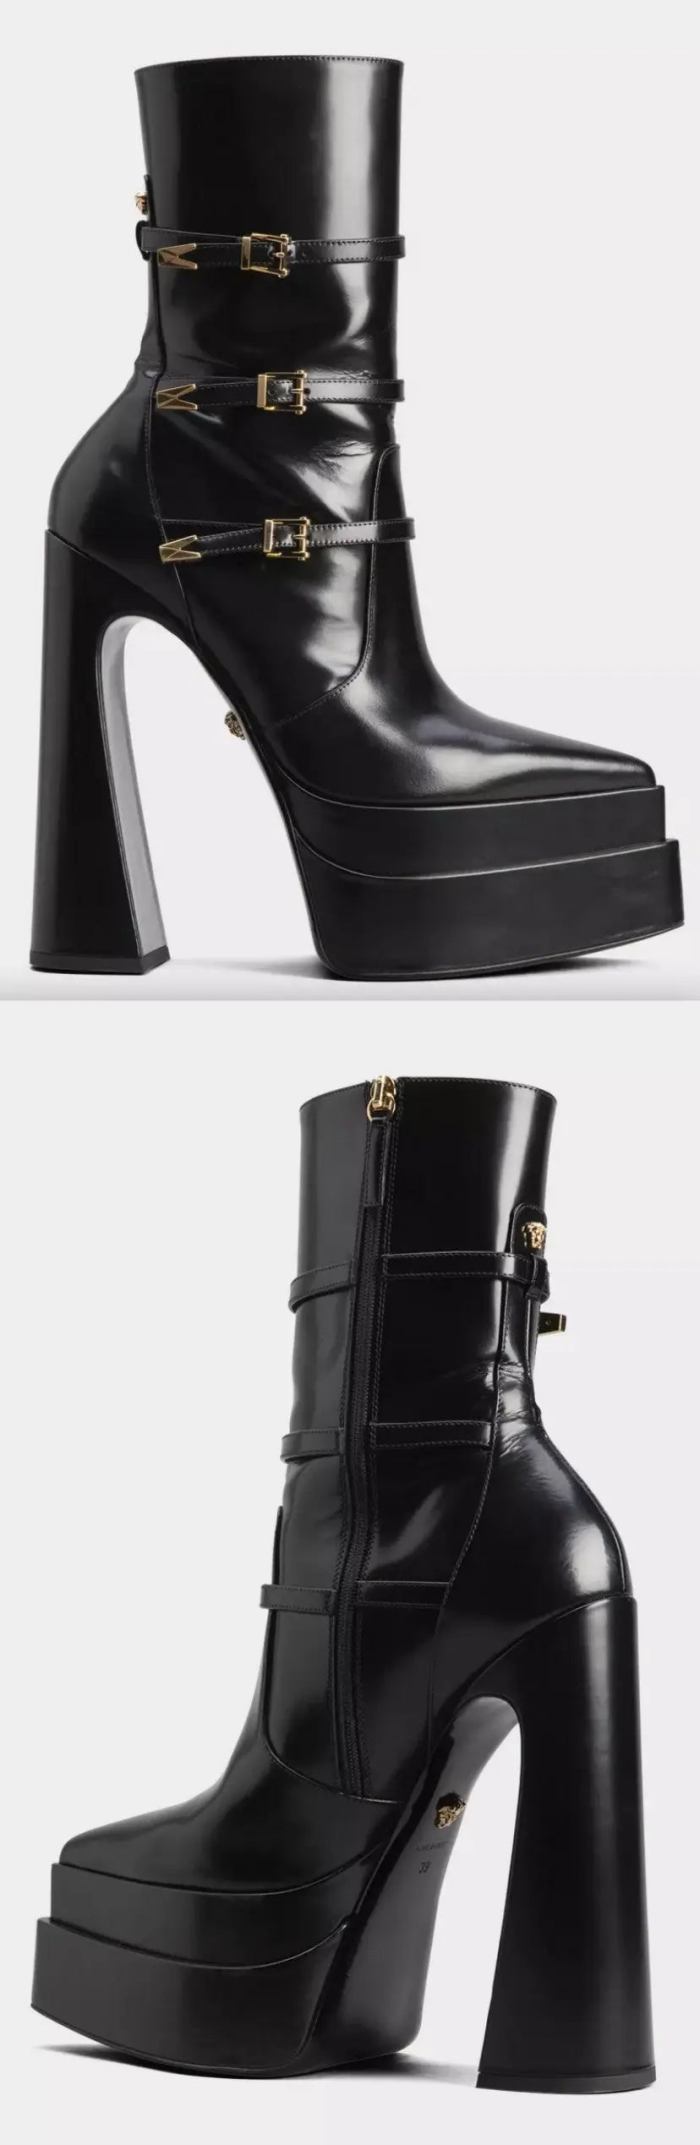 'Aevitas' Medusa 155mm Platform Boots - Black or White Women's Designer Fashions